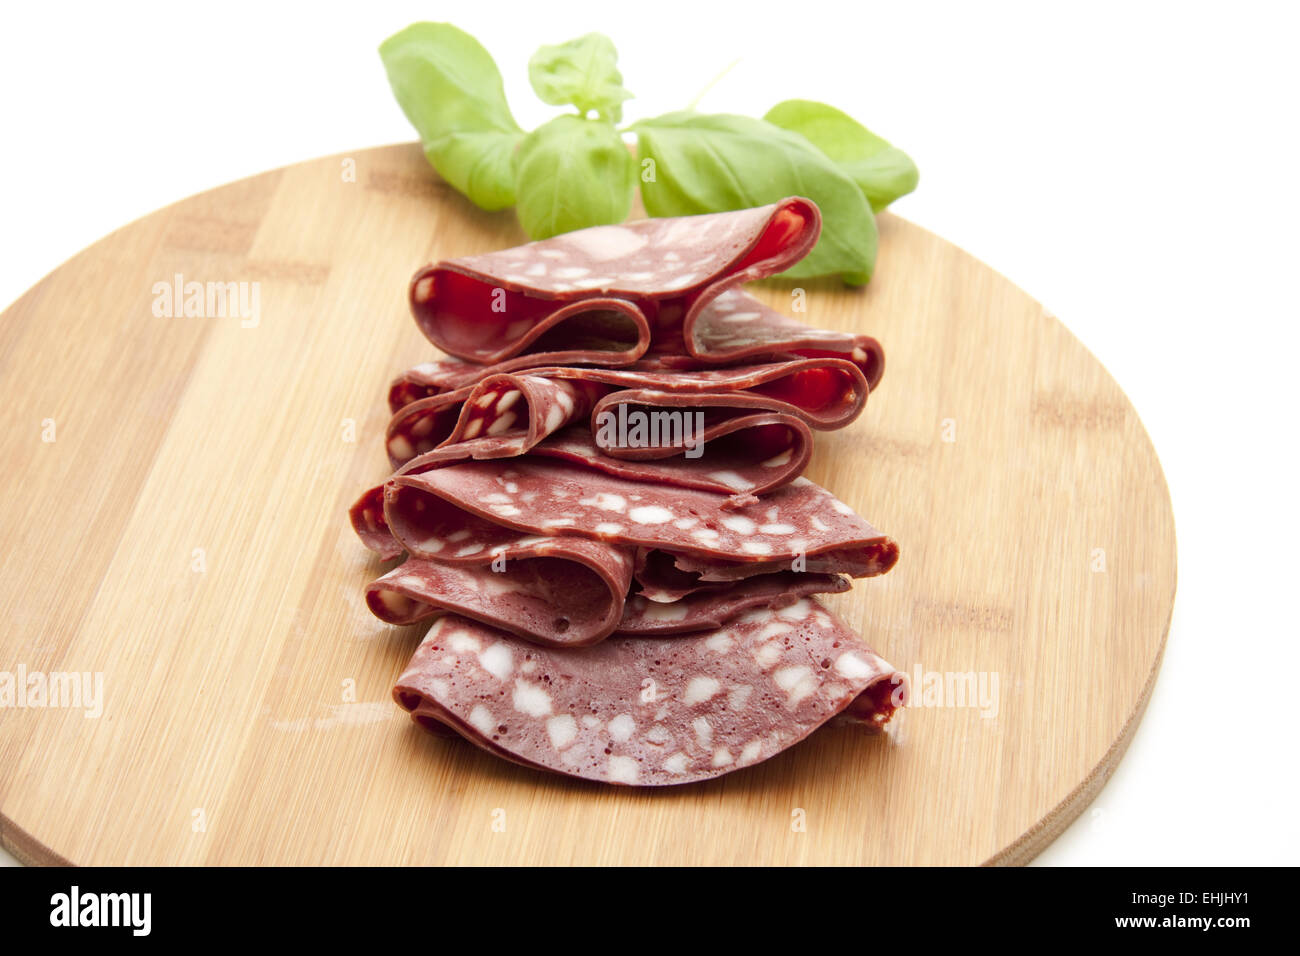 Blood sausage with basil Stock Photo